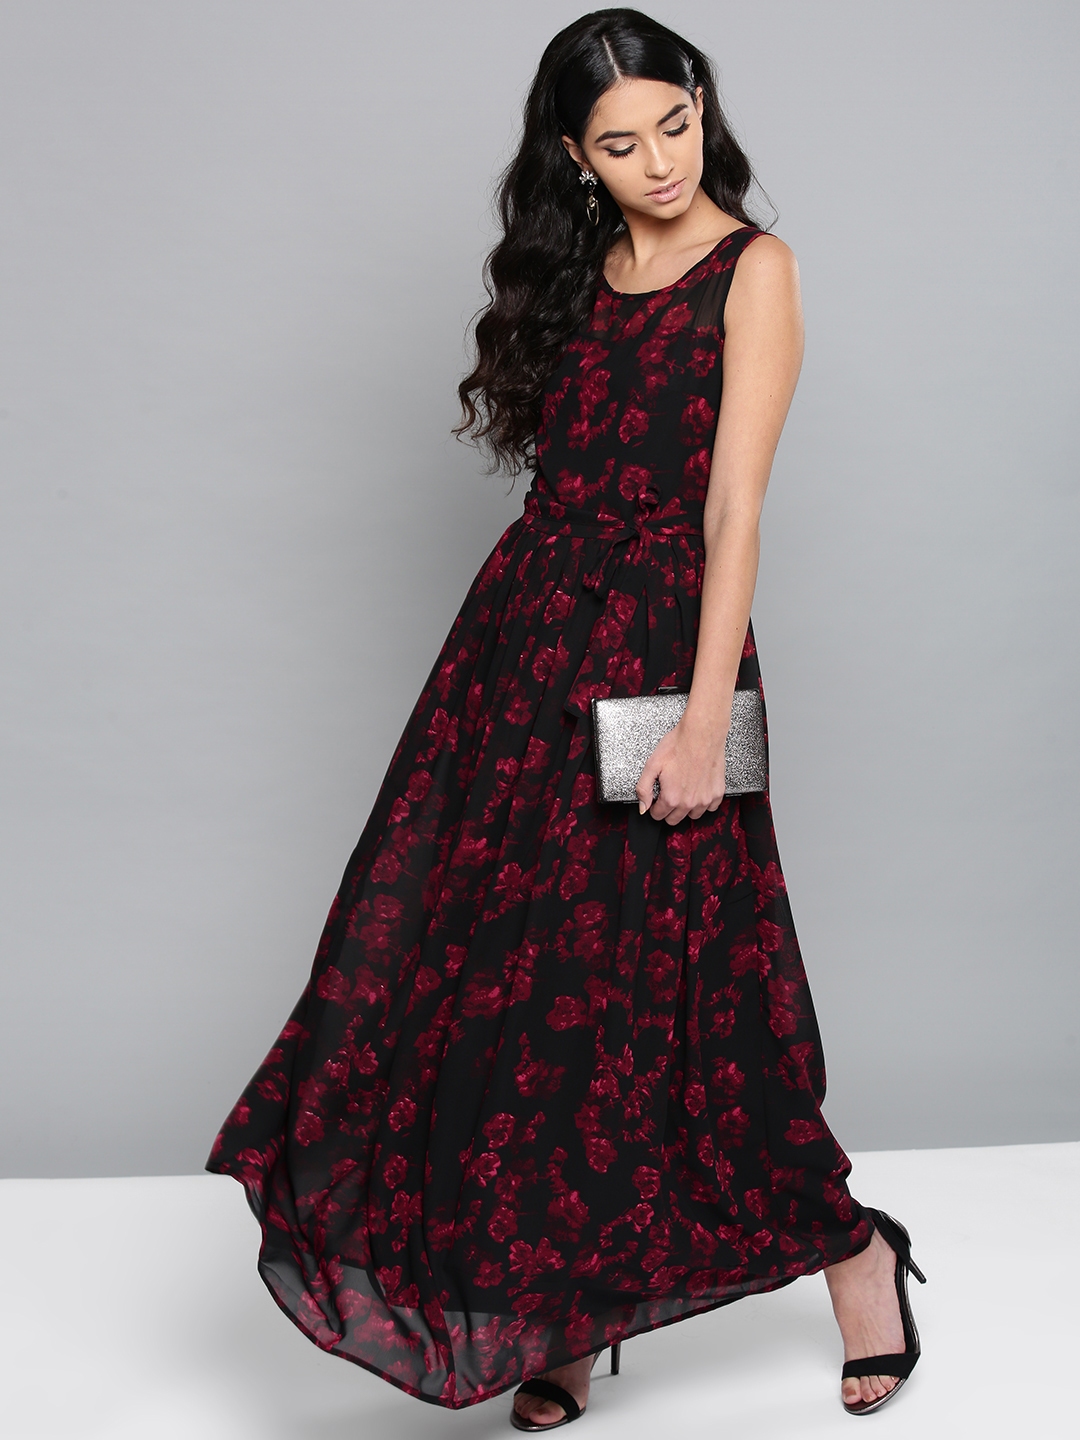 sarah seven prosecco gown price